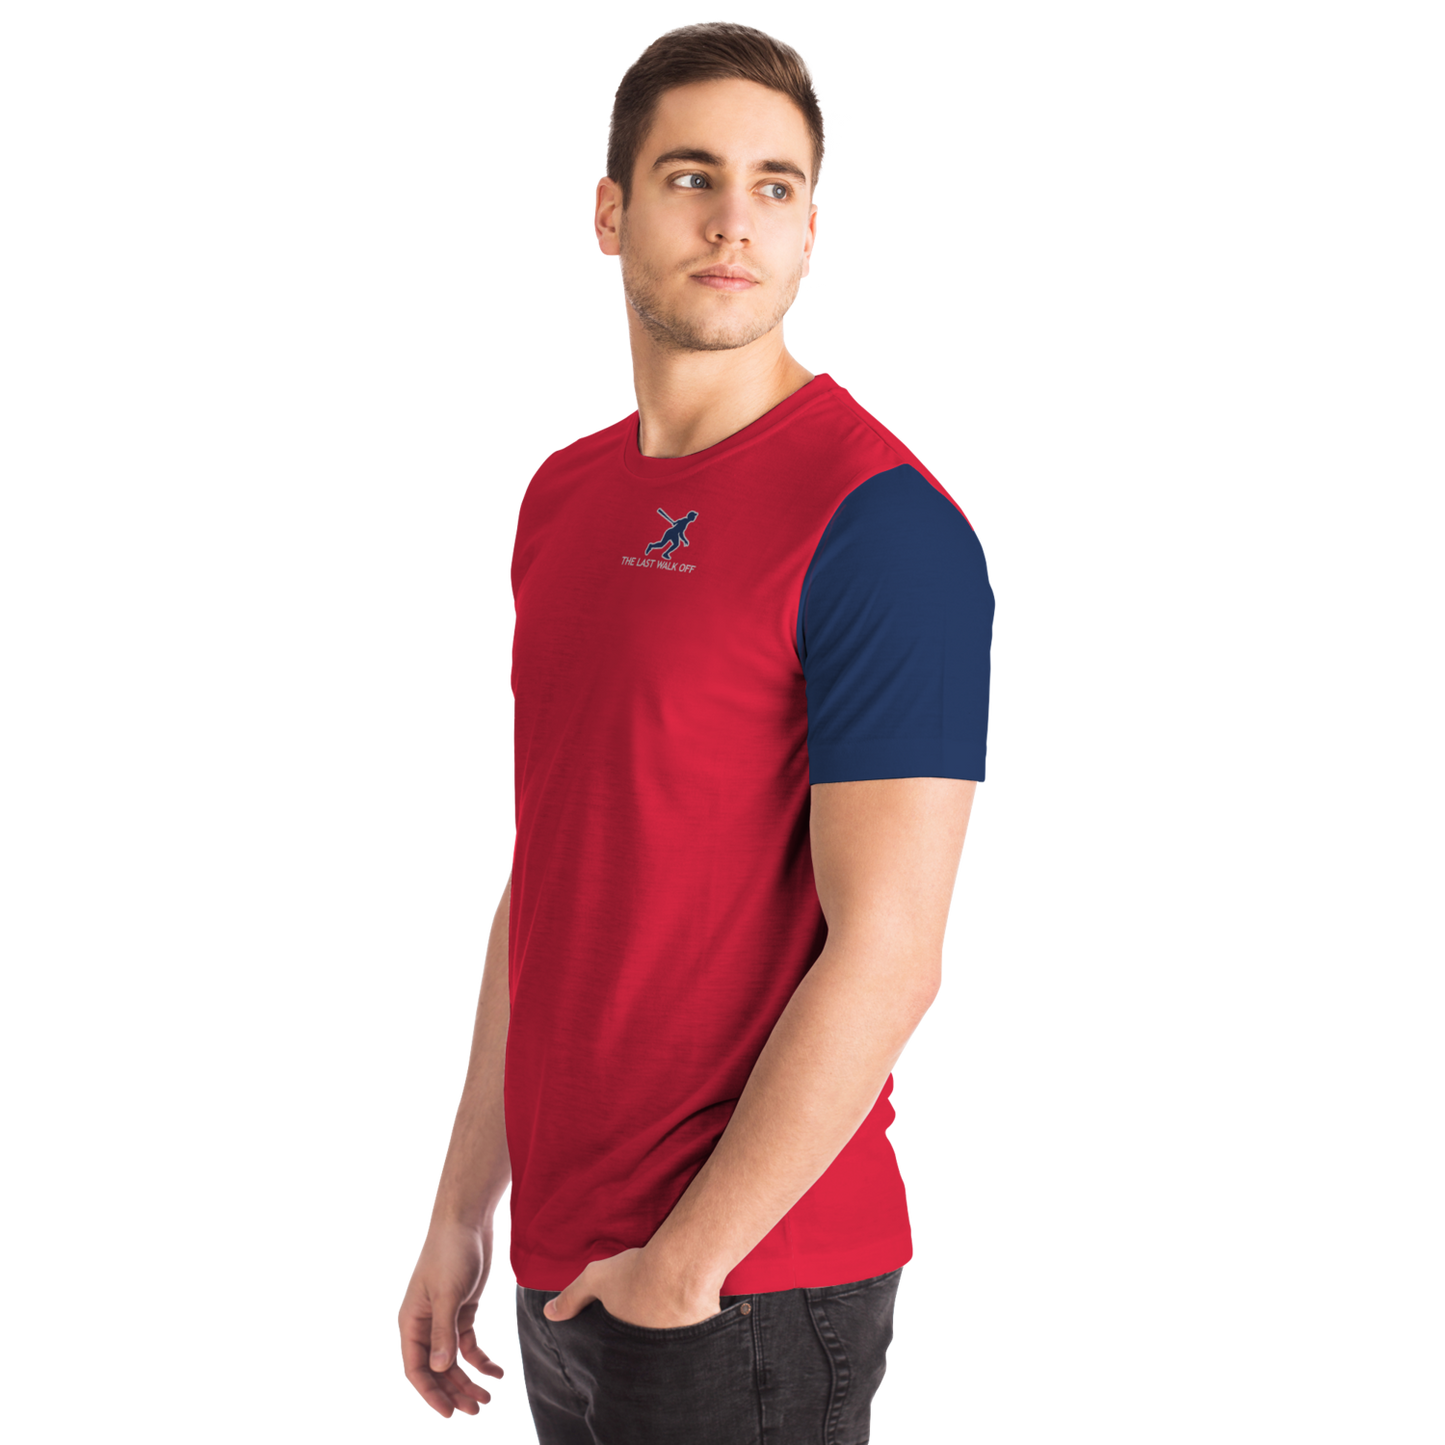 Cleveland Red Navy Blue Short Sleeve Shirt